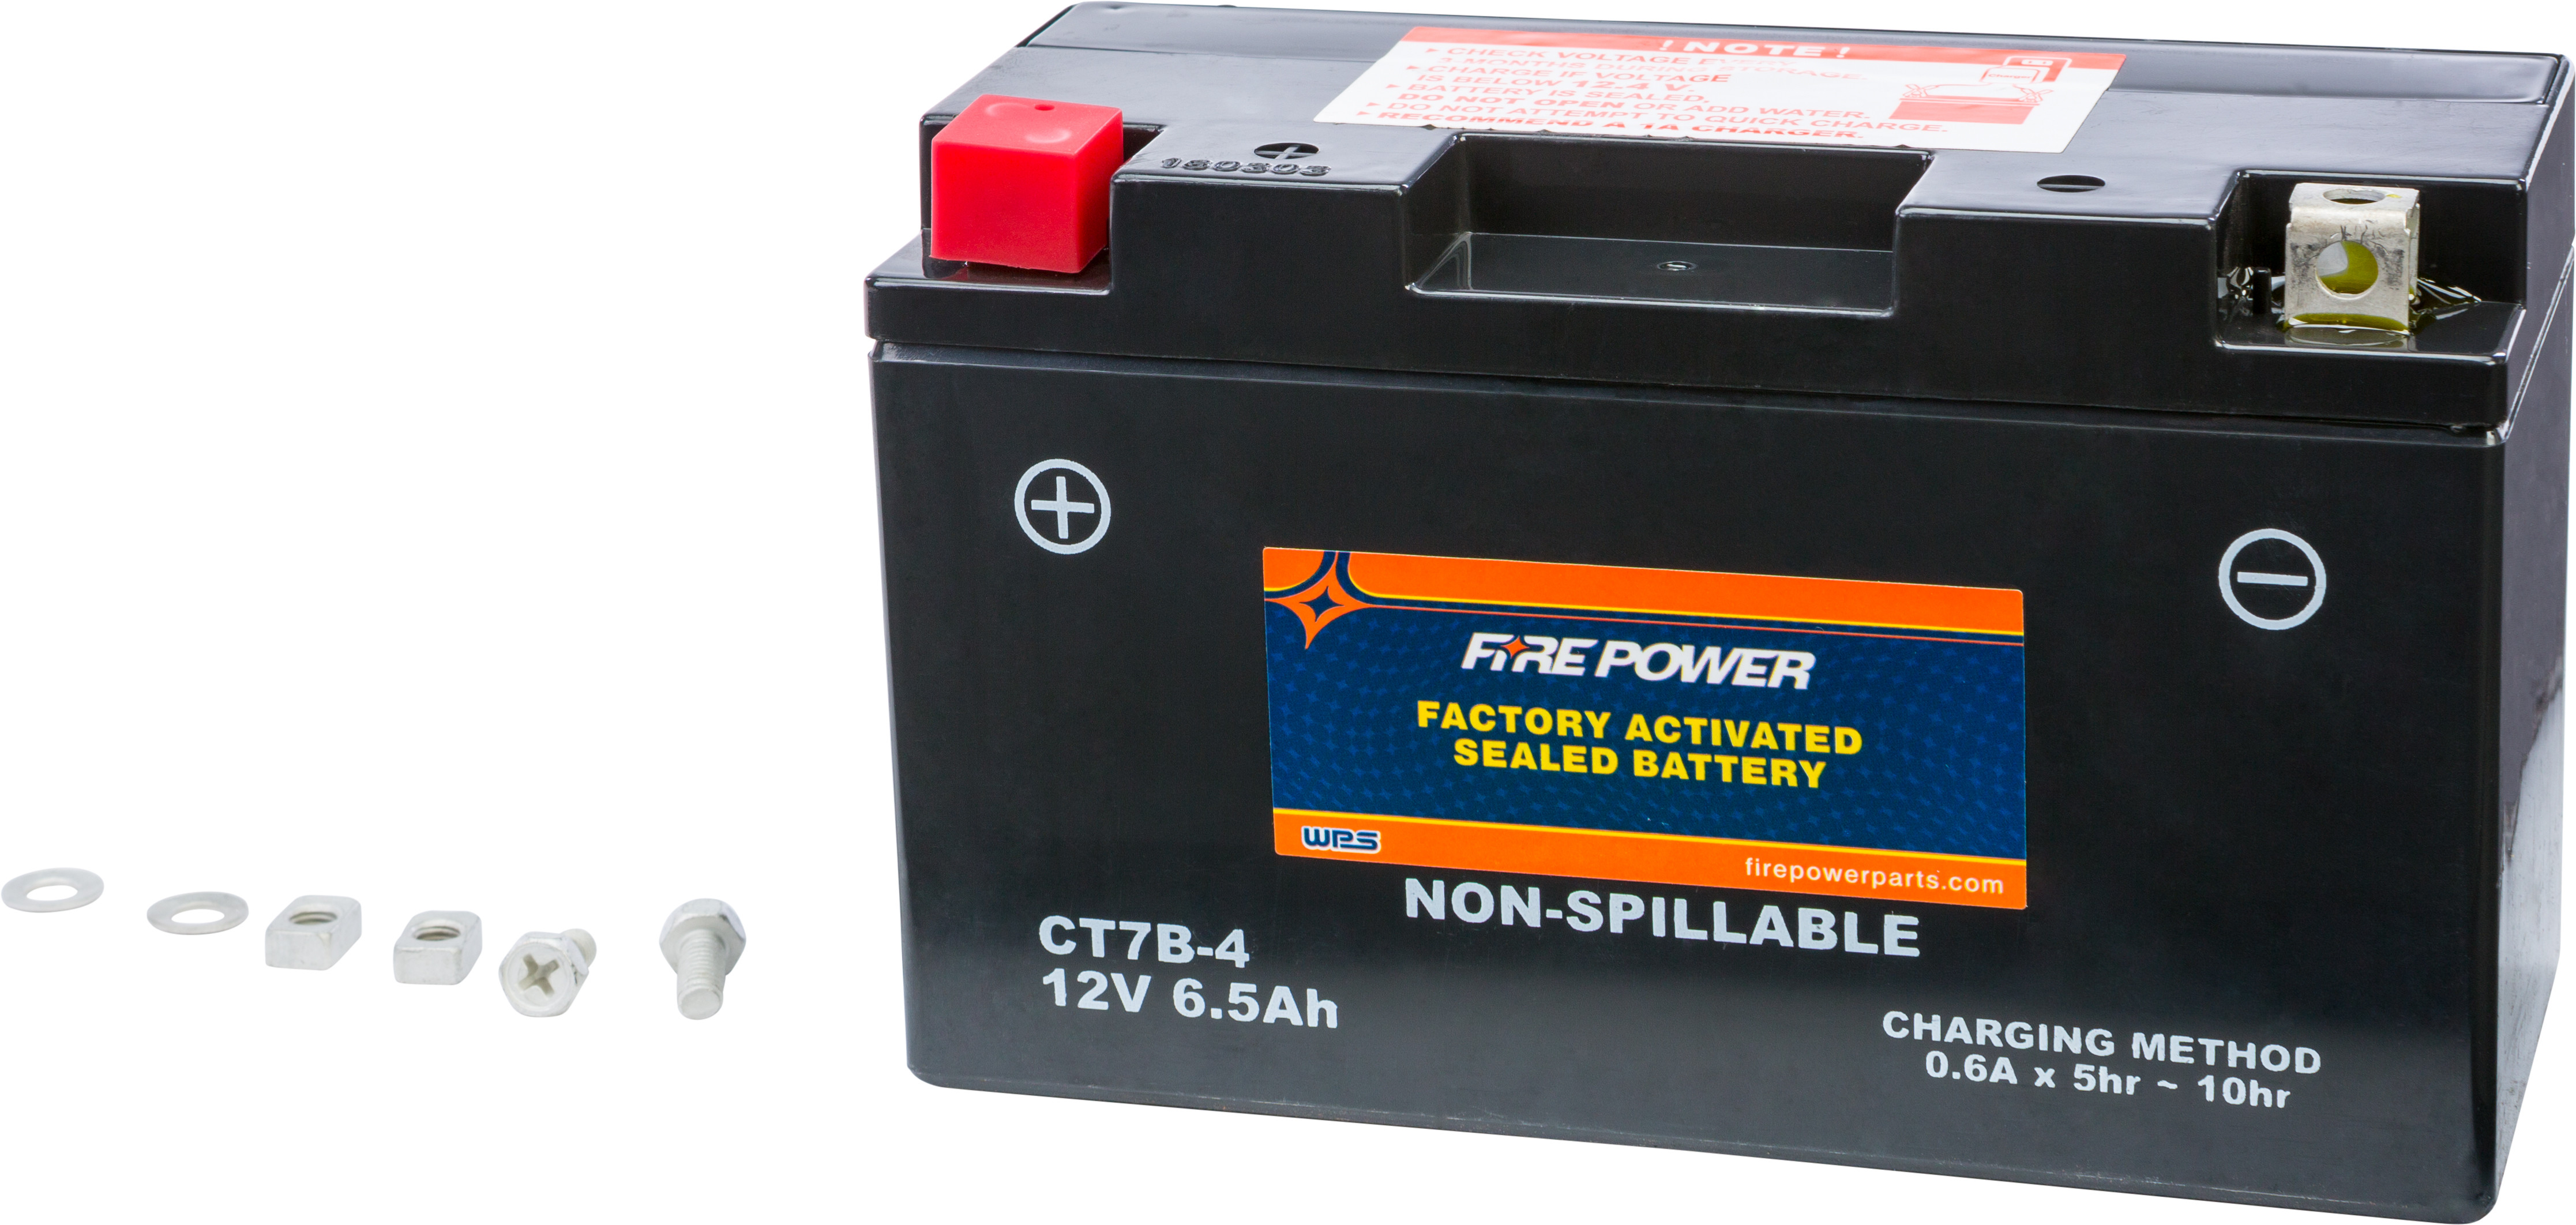 Kjing Power Sport аккумулятор. Sealed Battery. Power Battery Sport. Тренер для аккумуляторов.